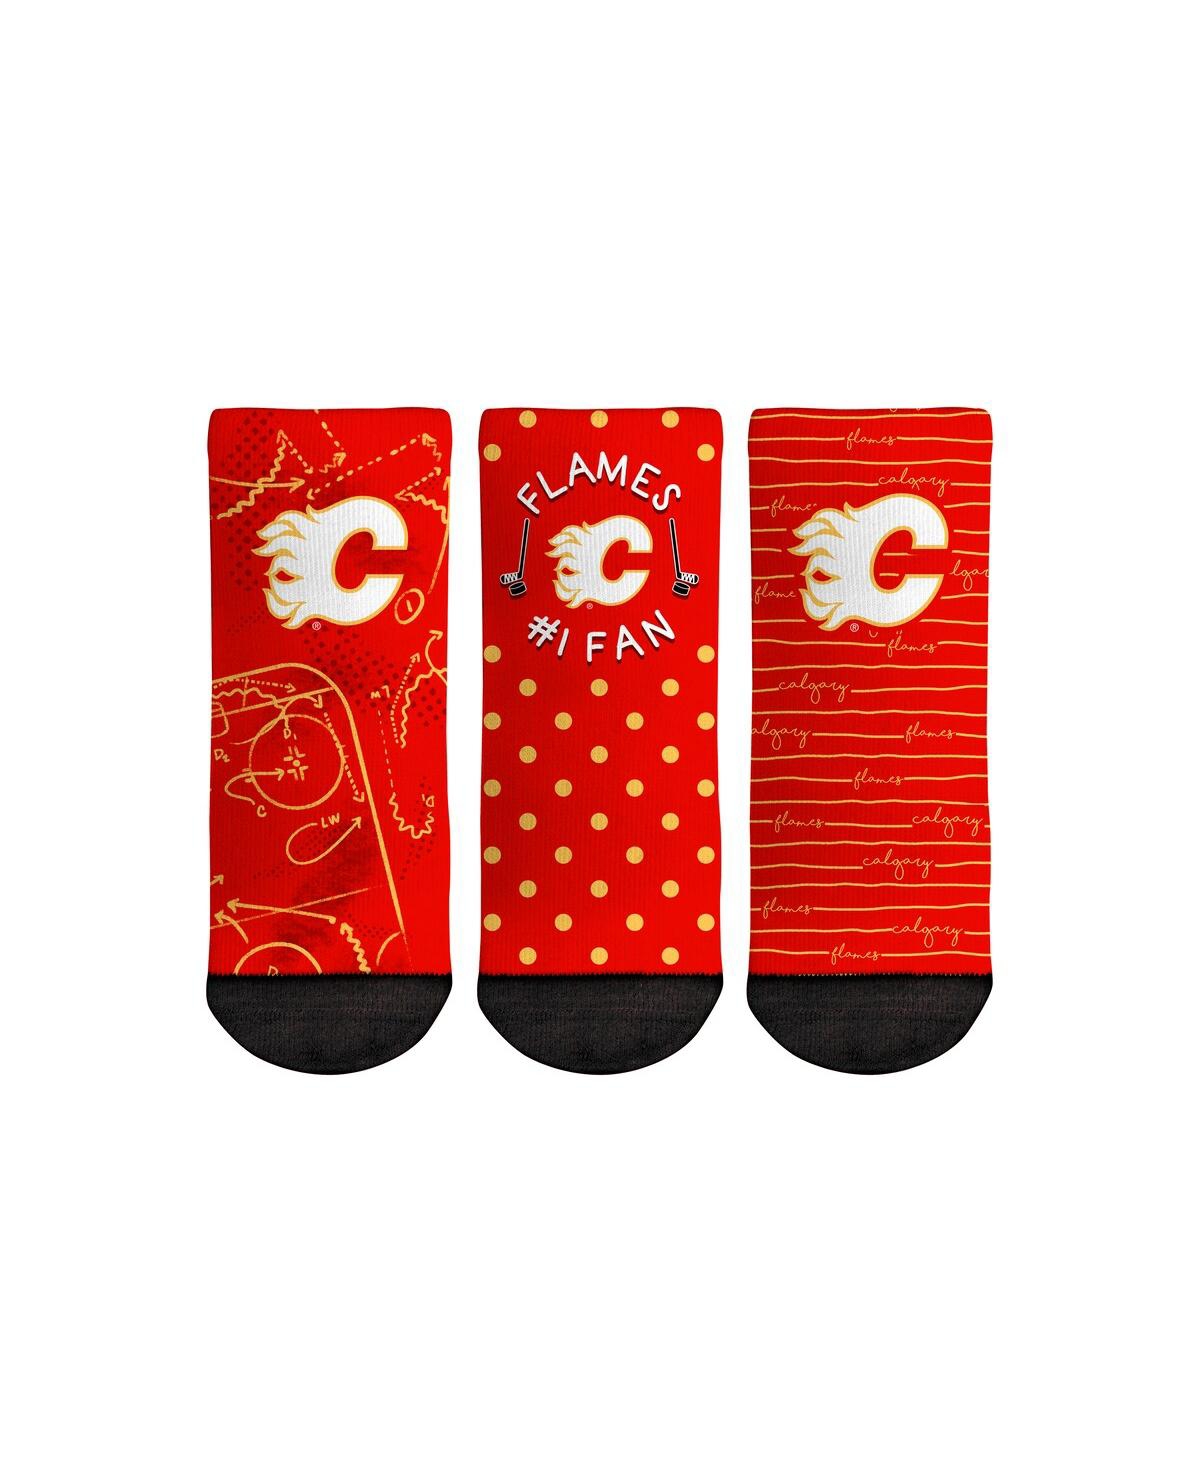 Rock 'em Babies' Toddler Boys And Girls Rock Em Socks Calgary Flames #1 Fan 3-pack Crew Socks Set In Orange